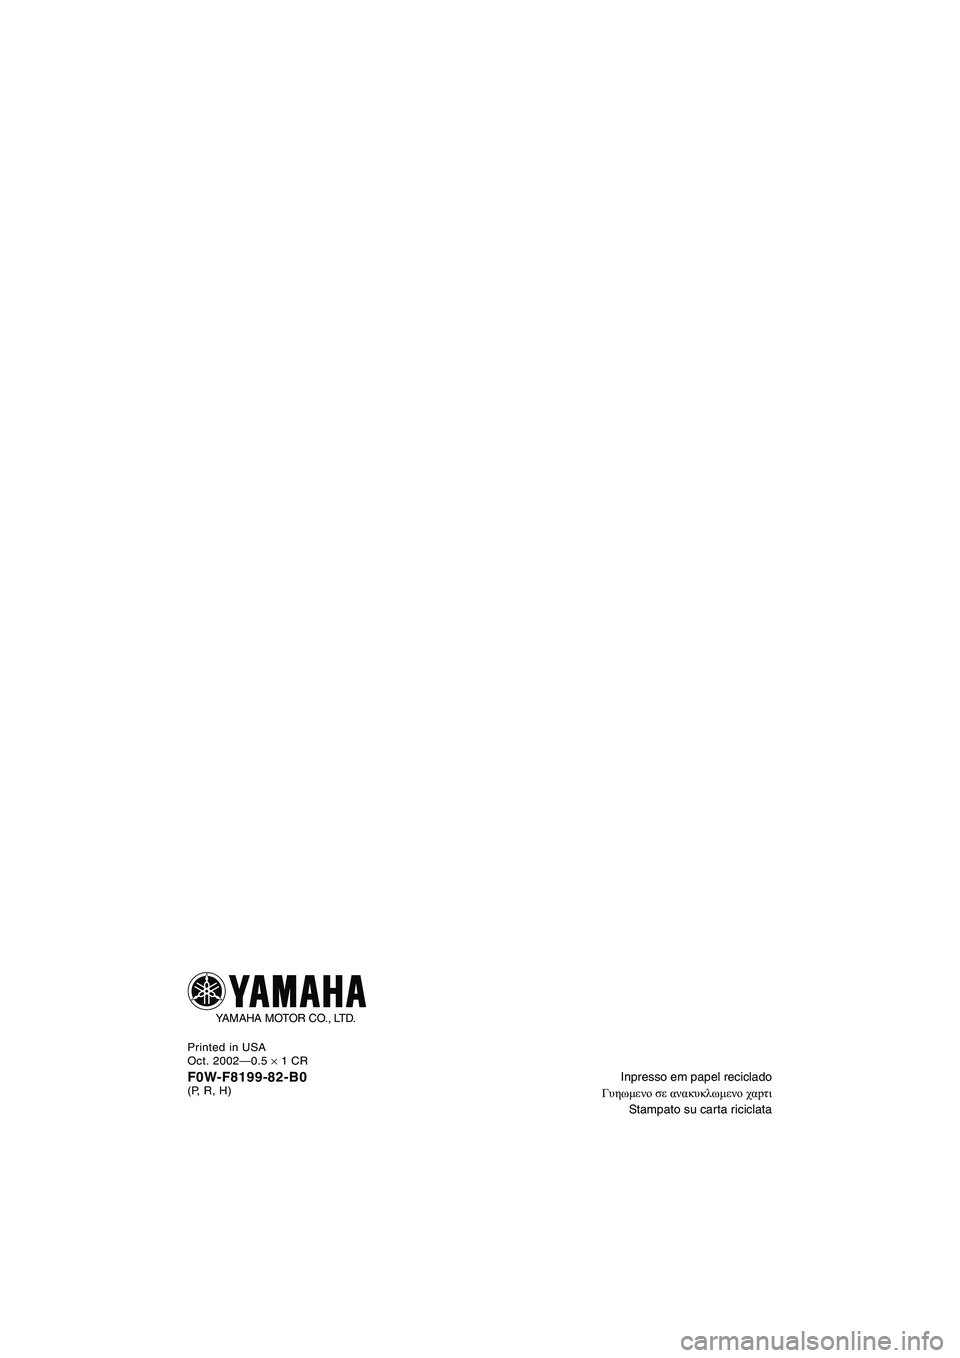 YAMAHA GP800R 2003  ΟΔΗΓΌΣ ΧΡΉΣΗΣ (in Greek) Inpresso em papel reciclado
Γυηωμενο σε ανακυκλωμενο χαpτι
Stampato su carta riciclata
Printed in USA
Oct. 2002—0.5 
× 1 CR
F0W-F8199-82-B0(P, R, H)
YAMAHA MOTOR CO., LTD.